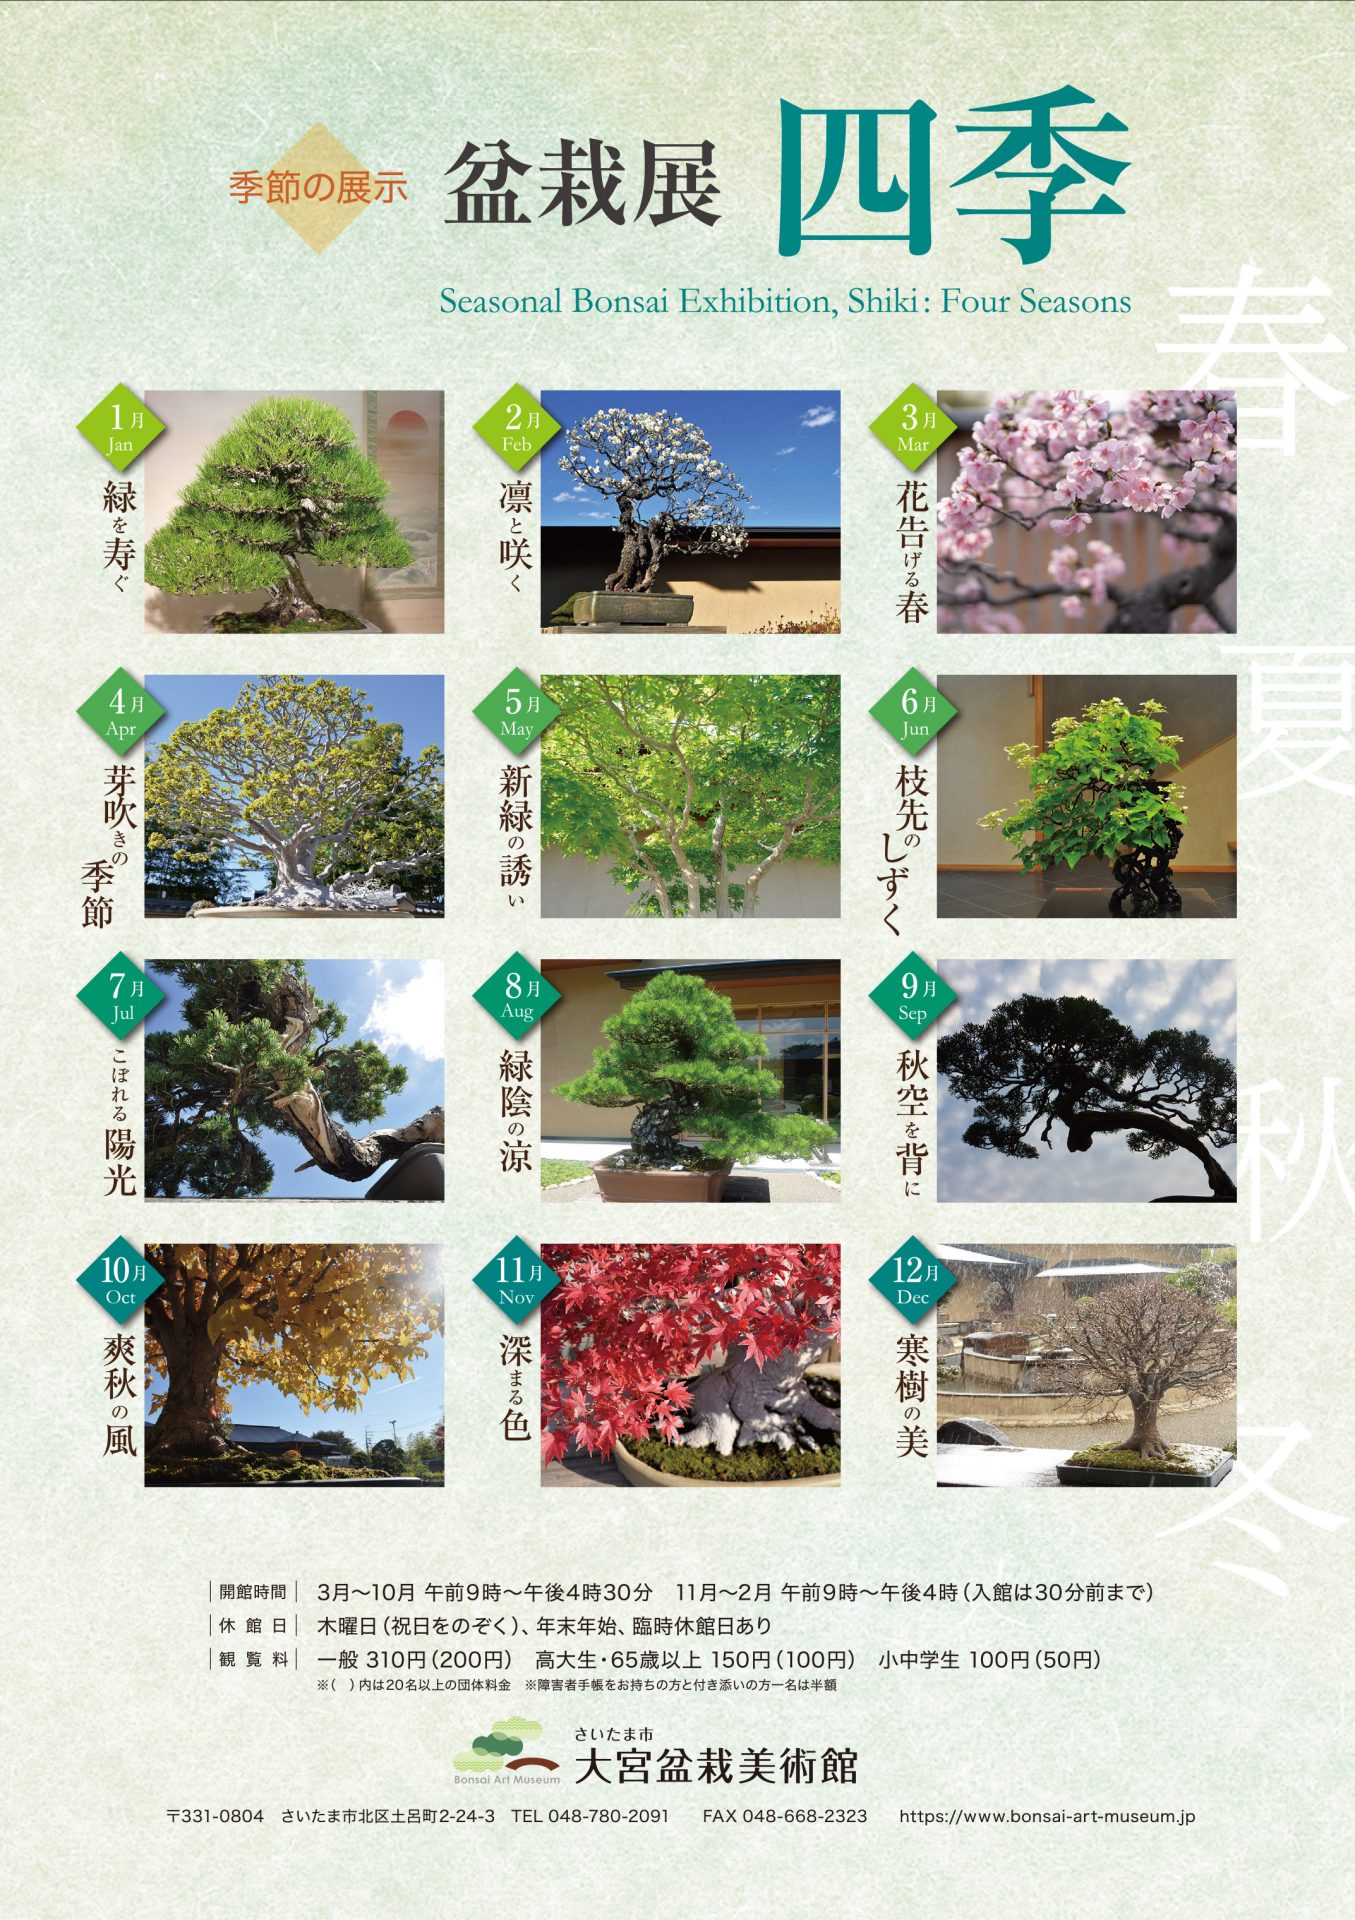 Seasonal Bonsai Exhibition, Shiki: Four Seasons, November, Deepening Colors